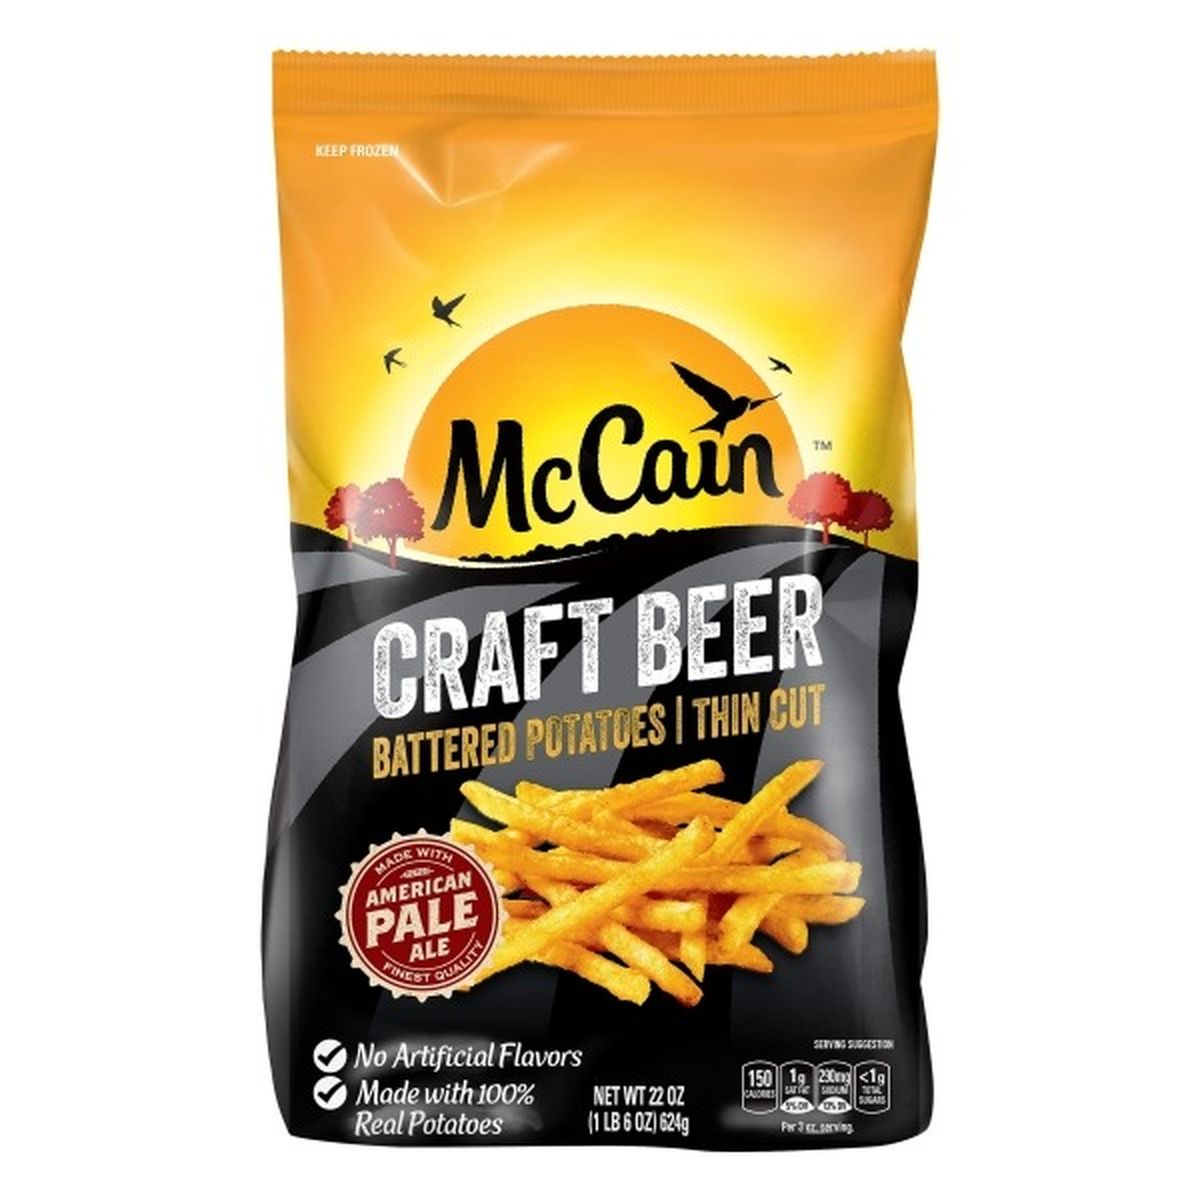 Calories in McCain Battered Potatoes, Craft Beer, Thin Cut